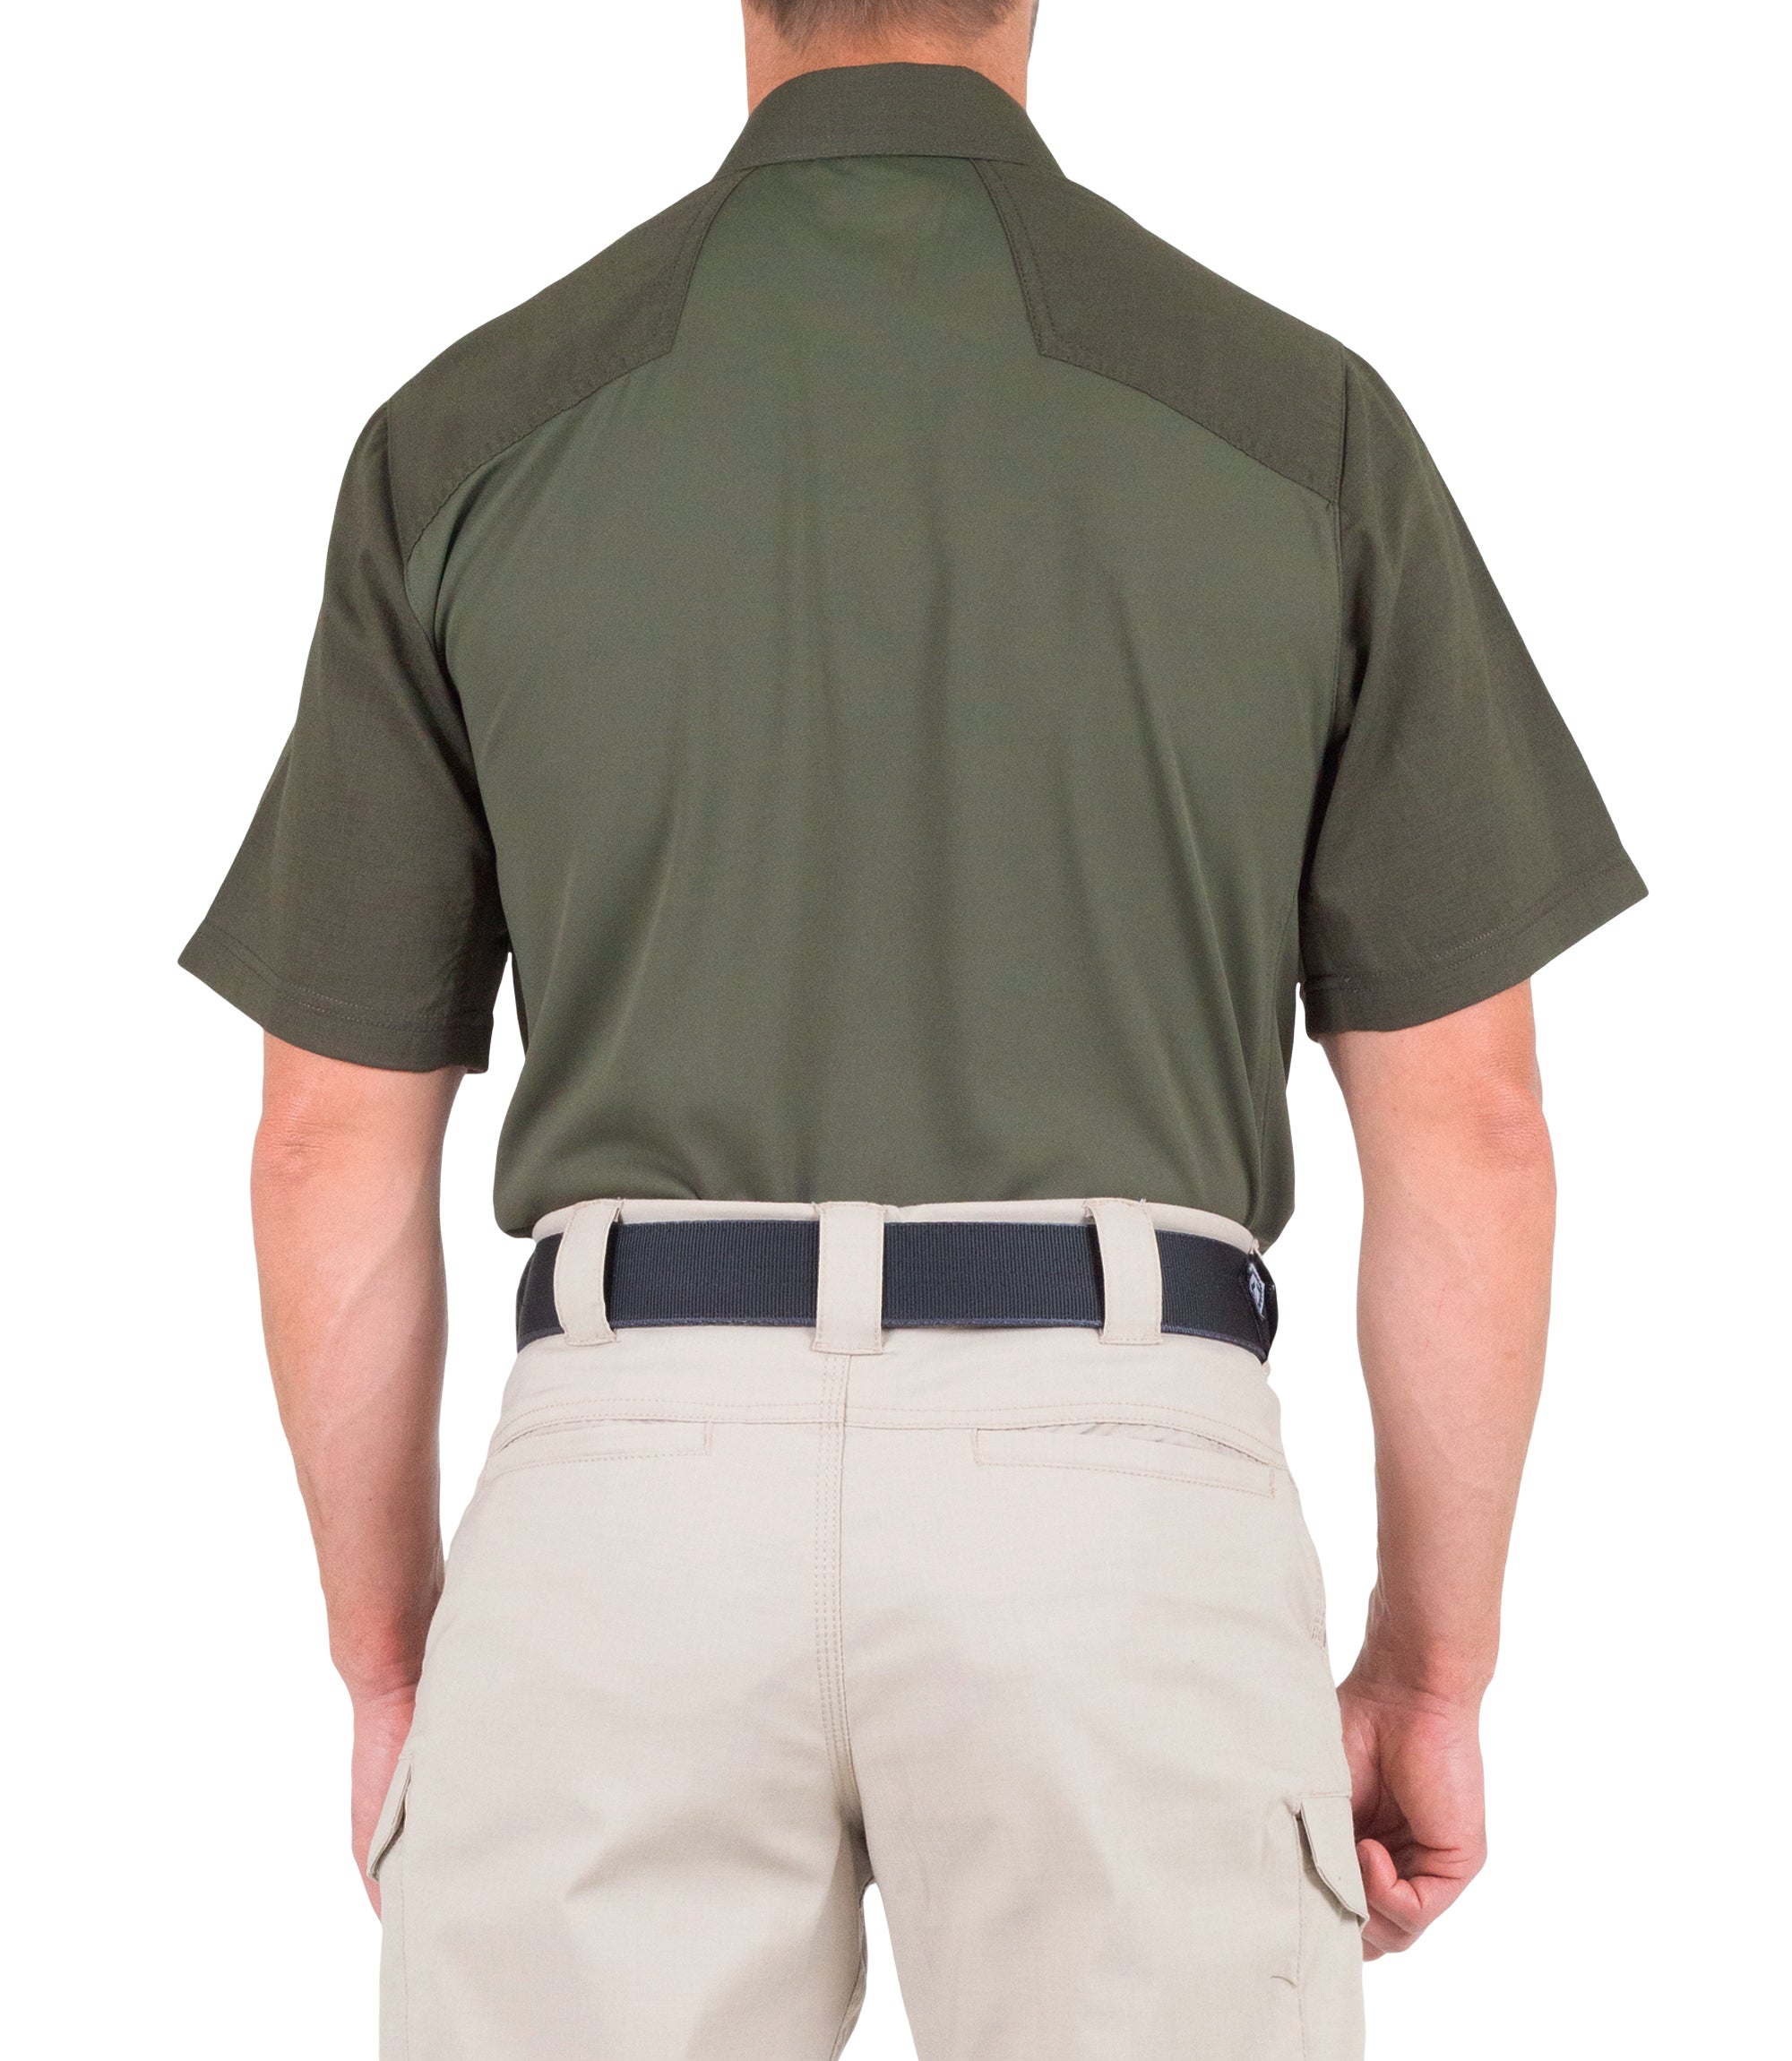 First Tactical - Men's V2 Pro Performance Short Sleeve Shirt - OD Green